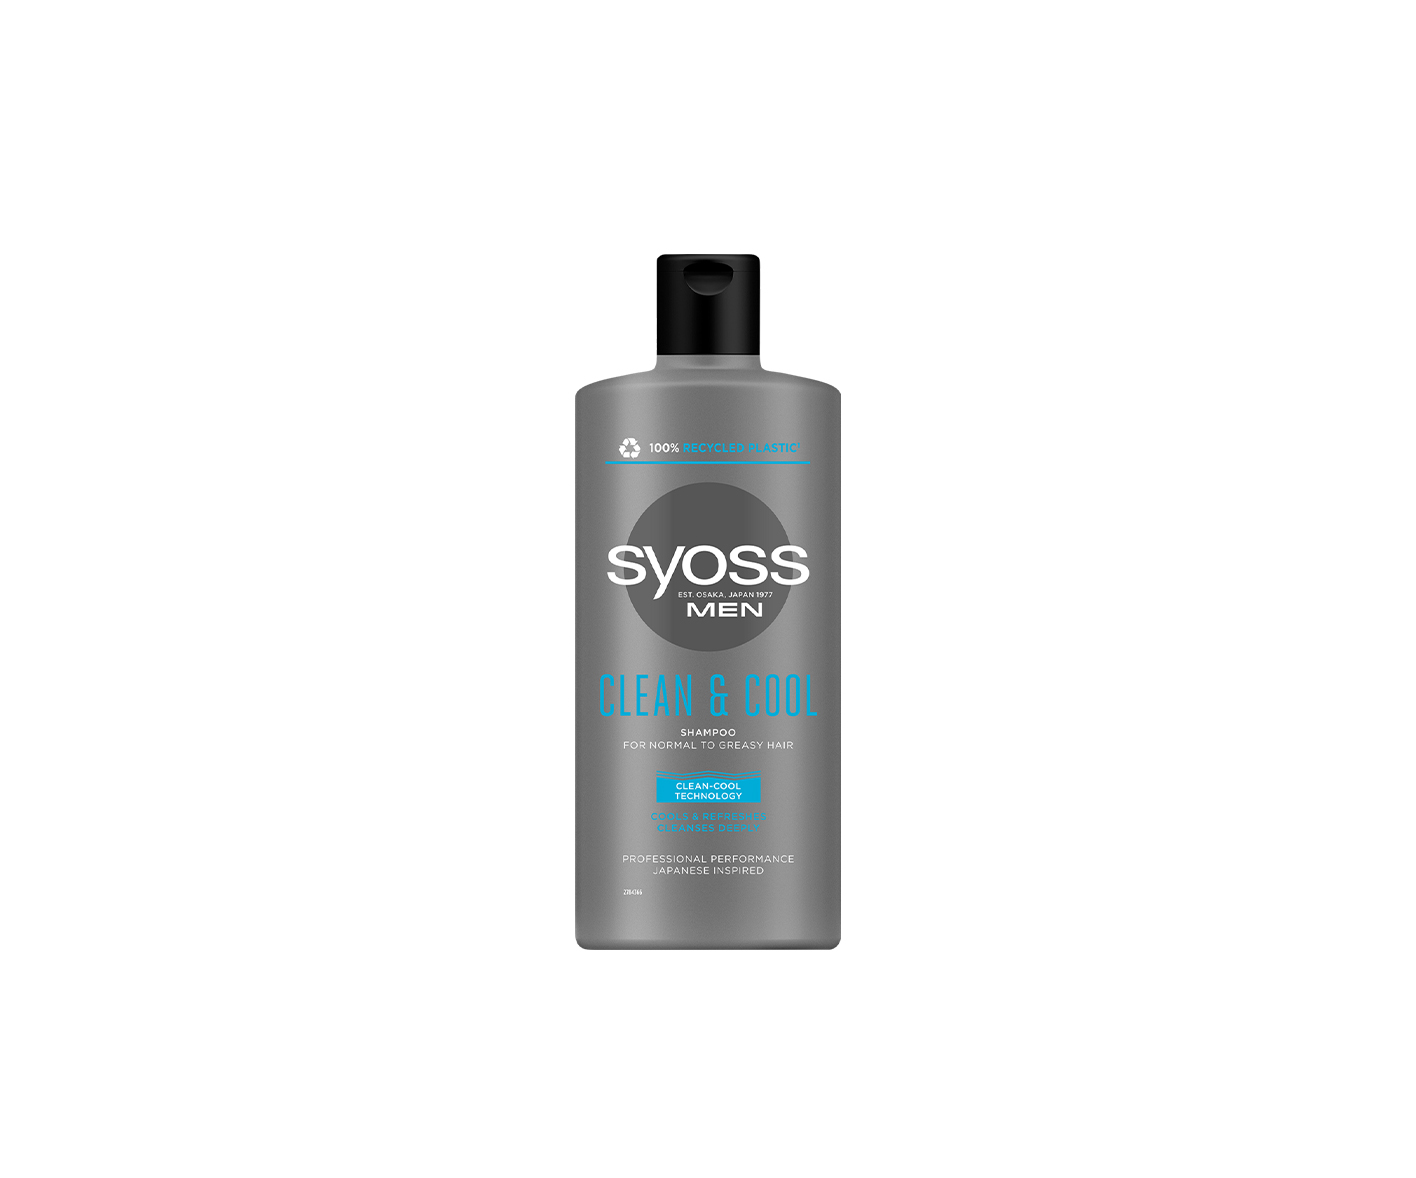 SYOSS MEN Clean & Cool, shampoo for men